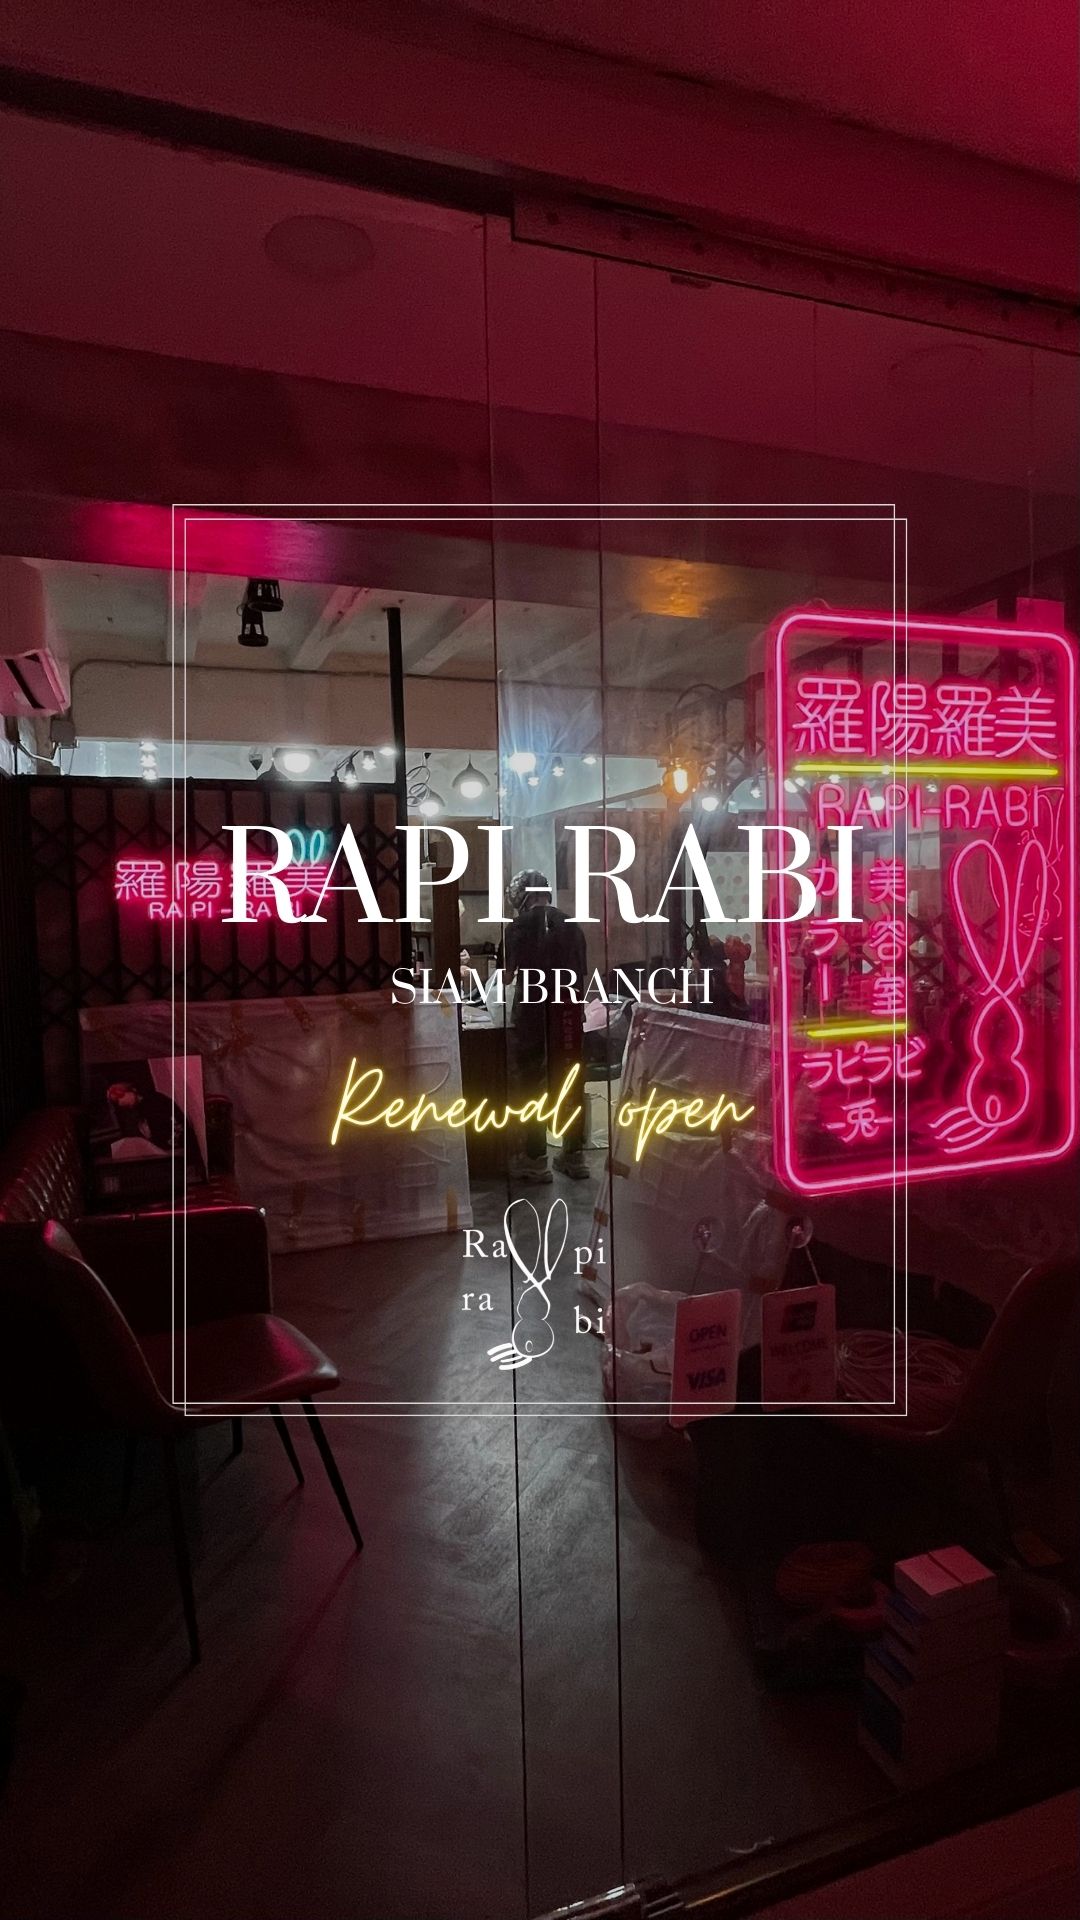 (TH) Renewal open Rapi-rabi siam branch!! 🐇 By Rapi-rabi